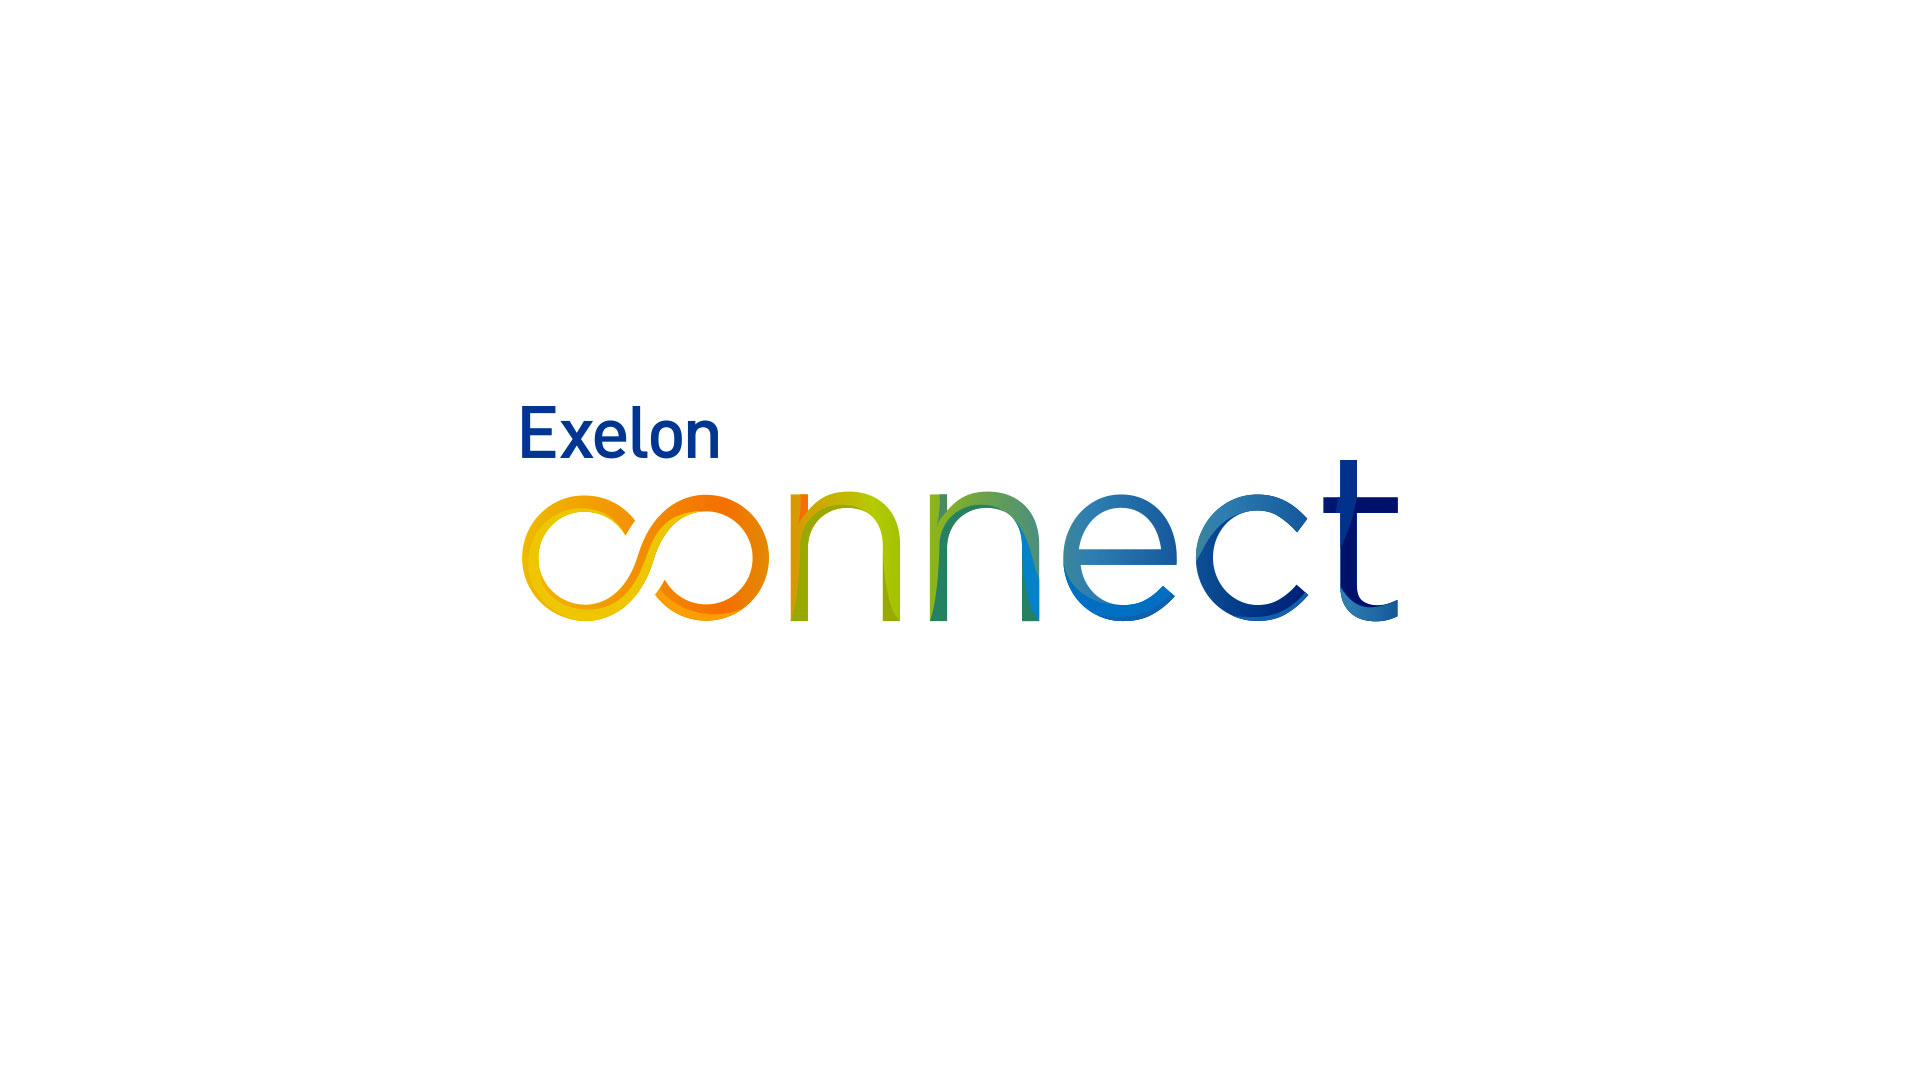 Exelon Connect